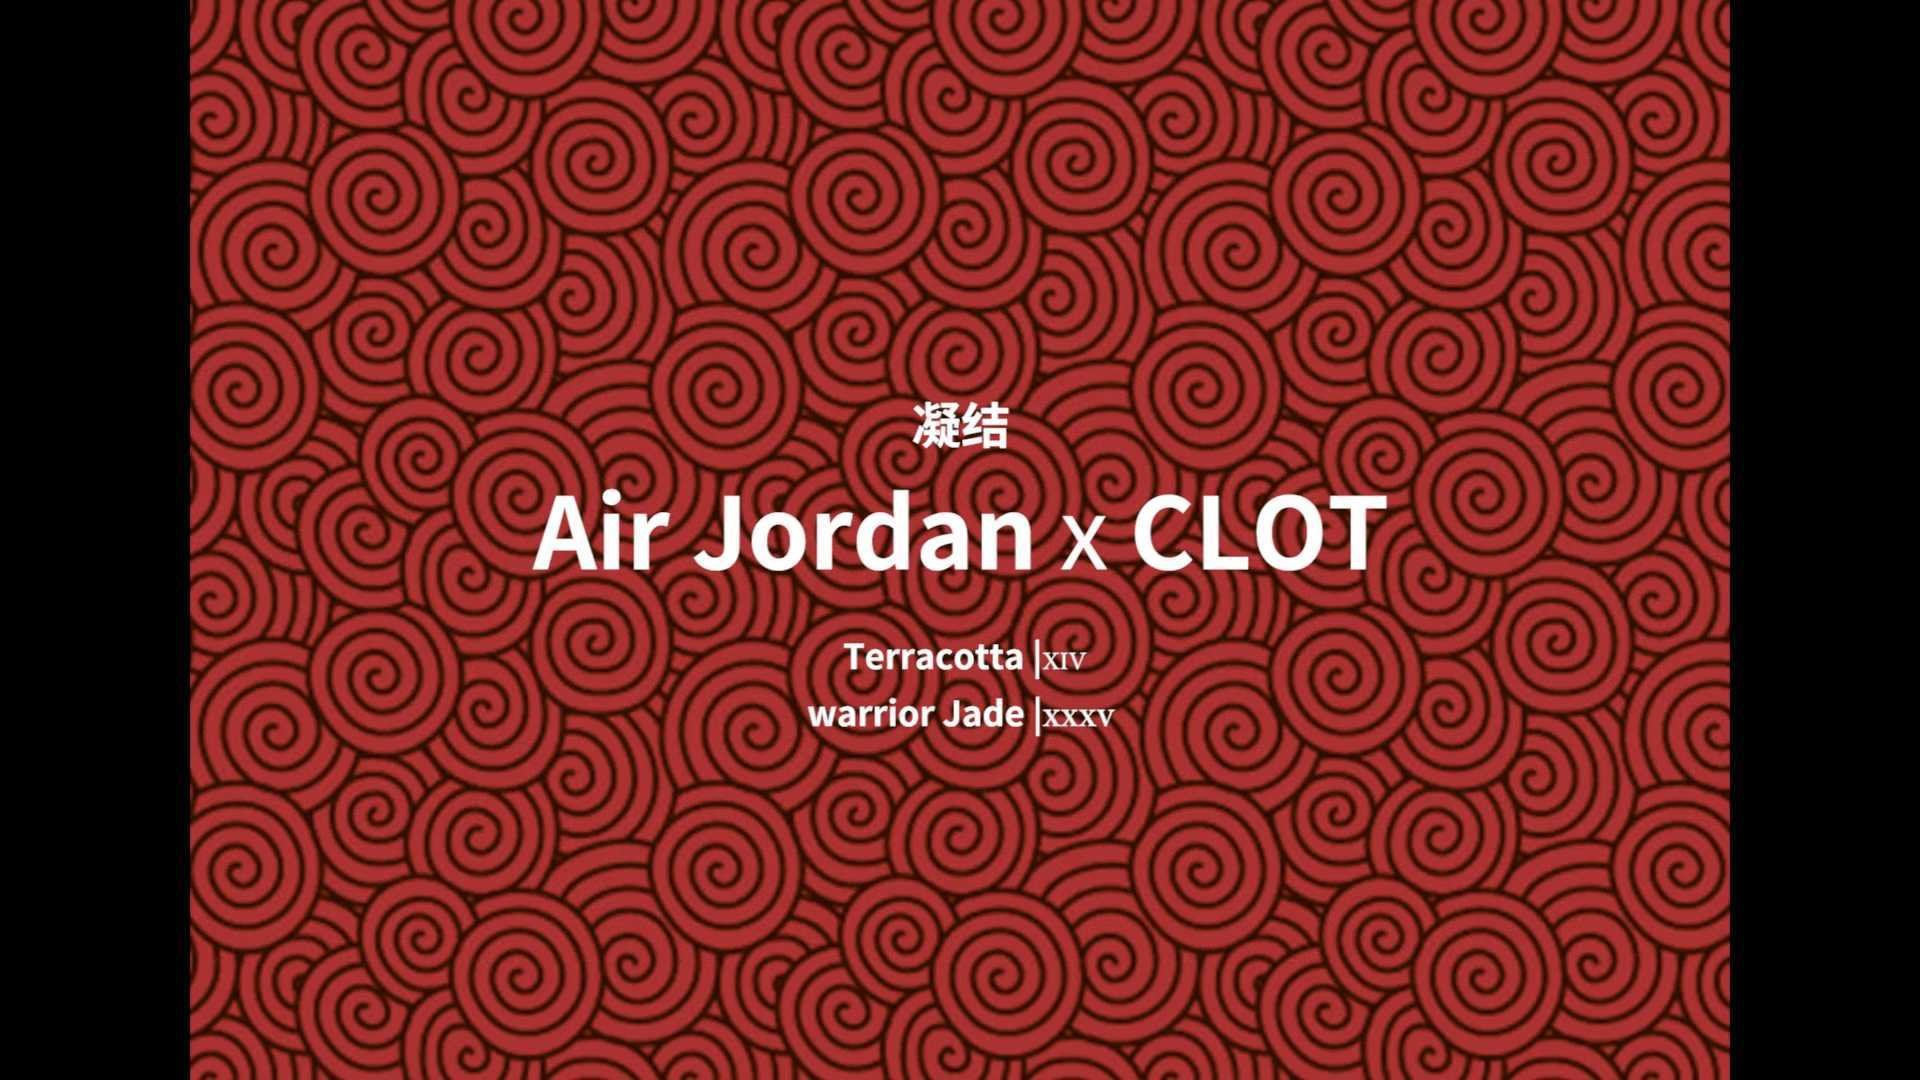 Air Jordan联名CLOT创意小短片